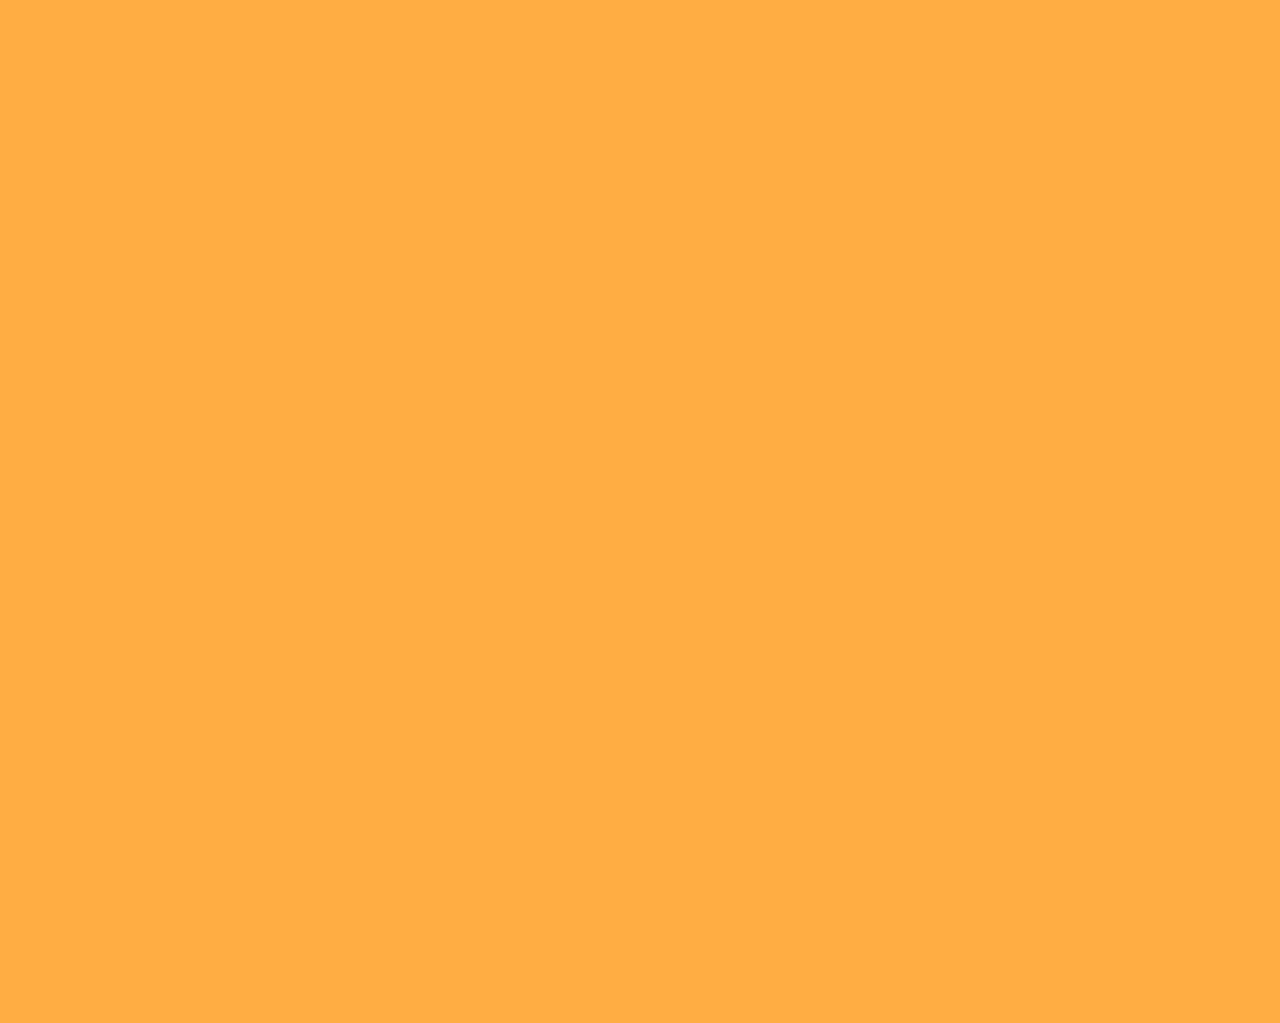 Free download Solid Orange Background 1280x1024 yellow orange